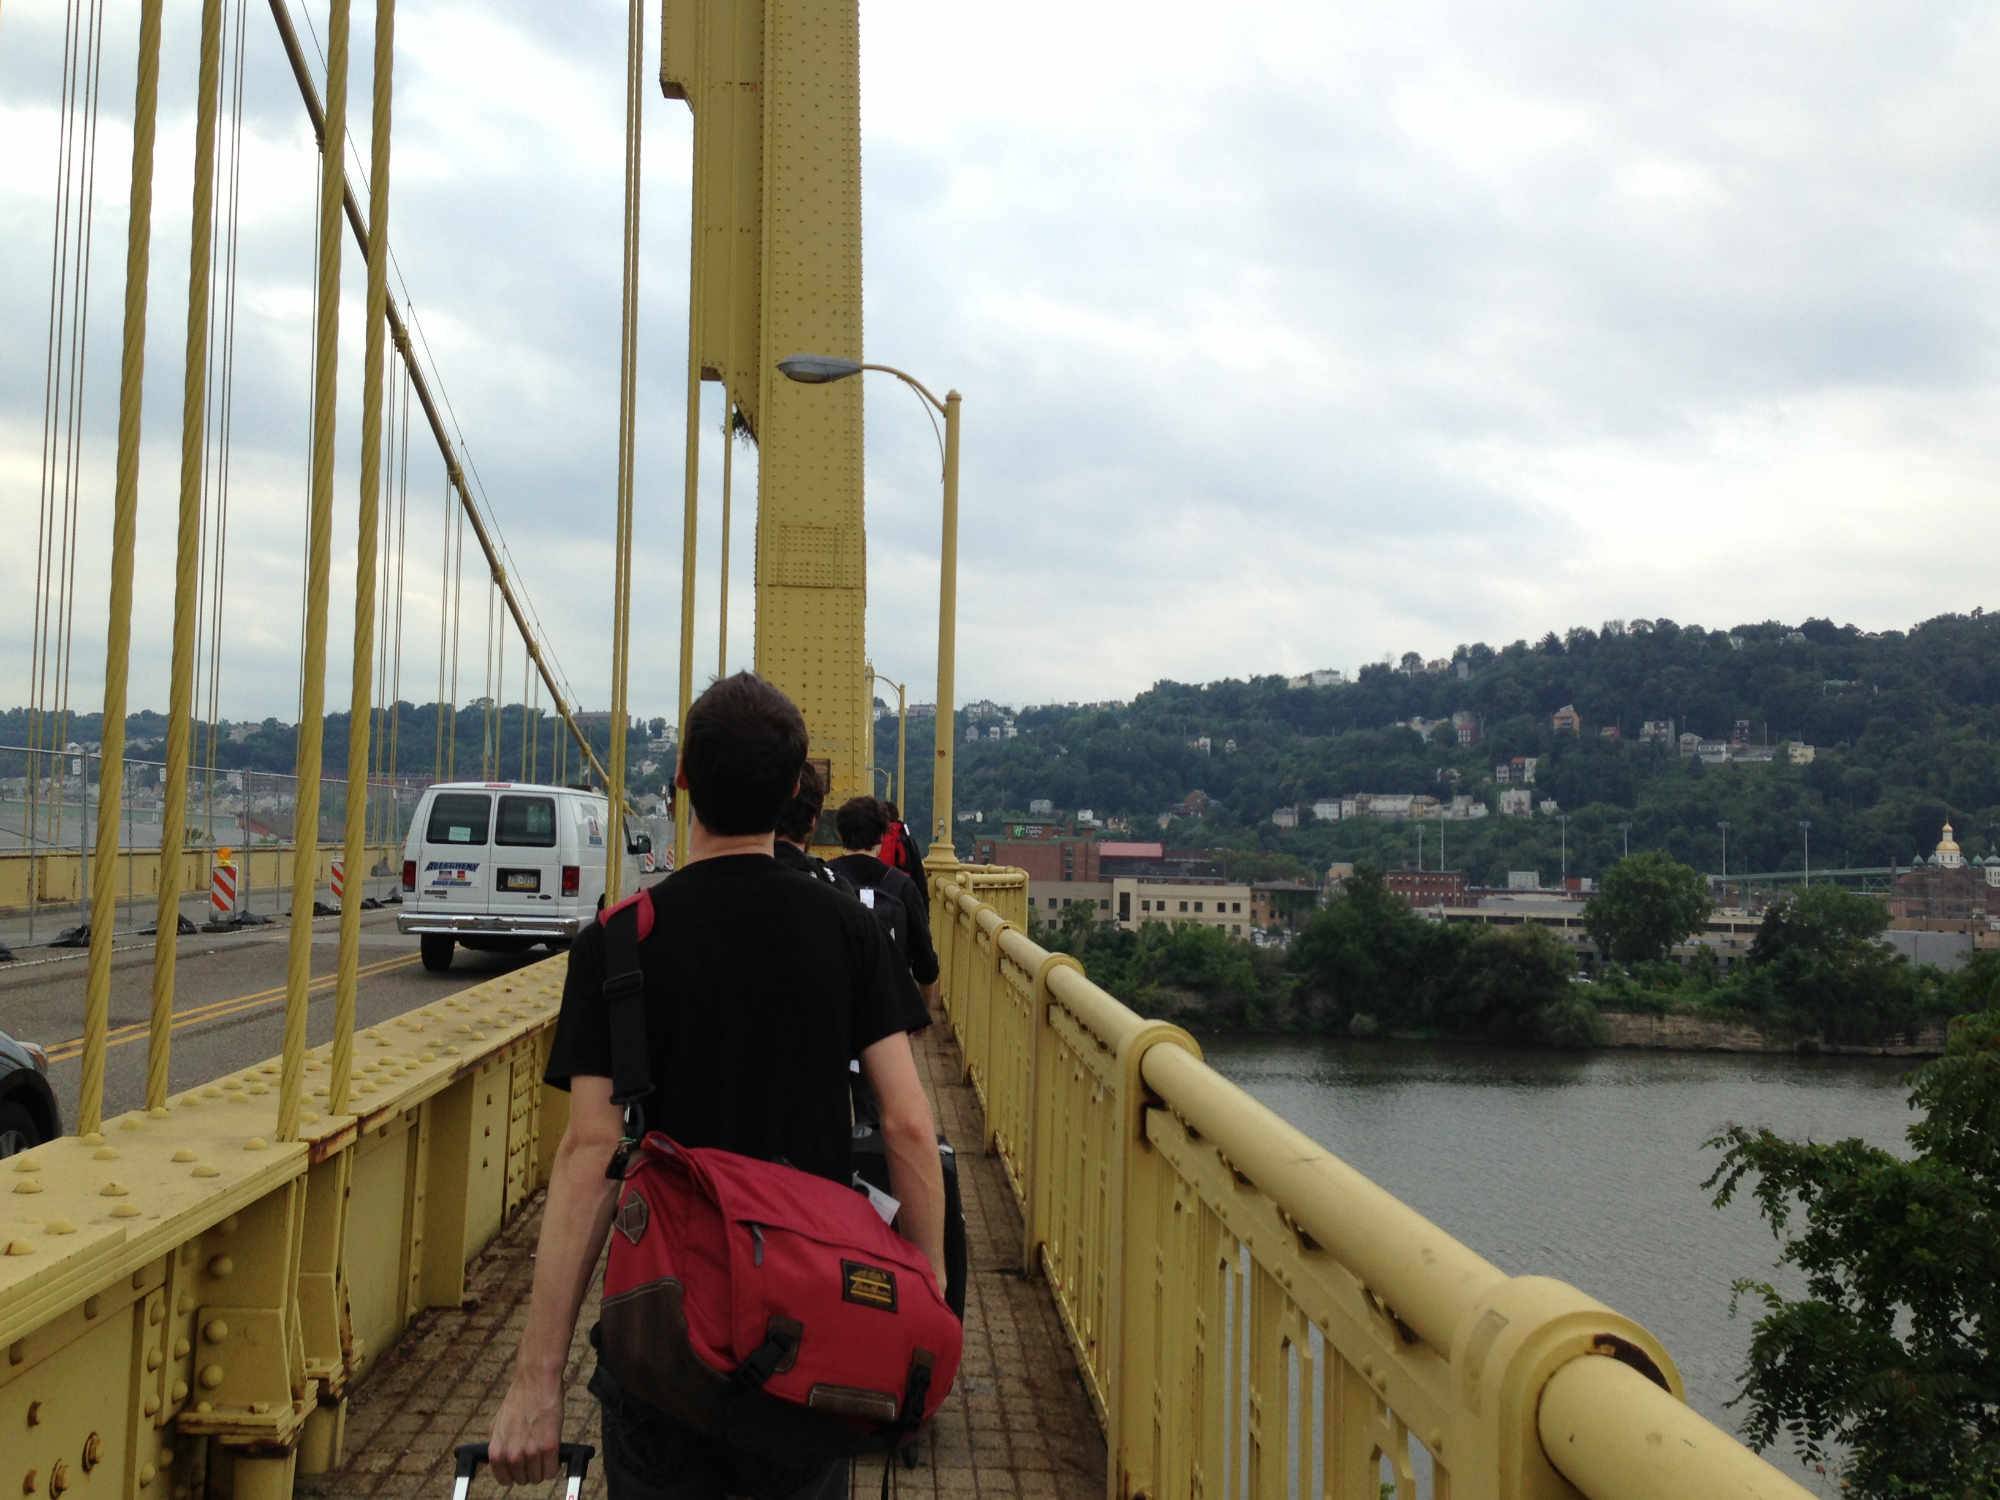 Crossing a bridge